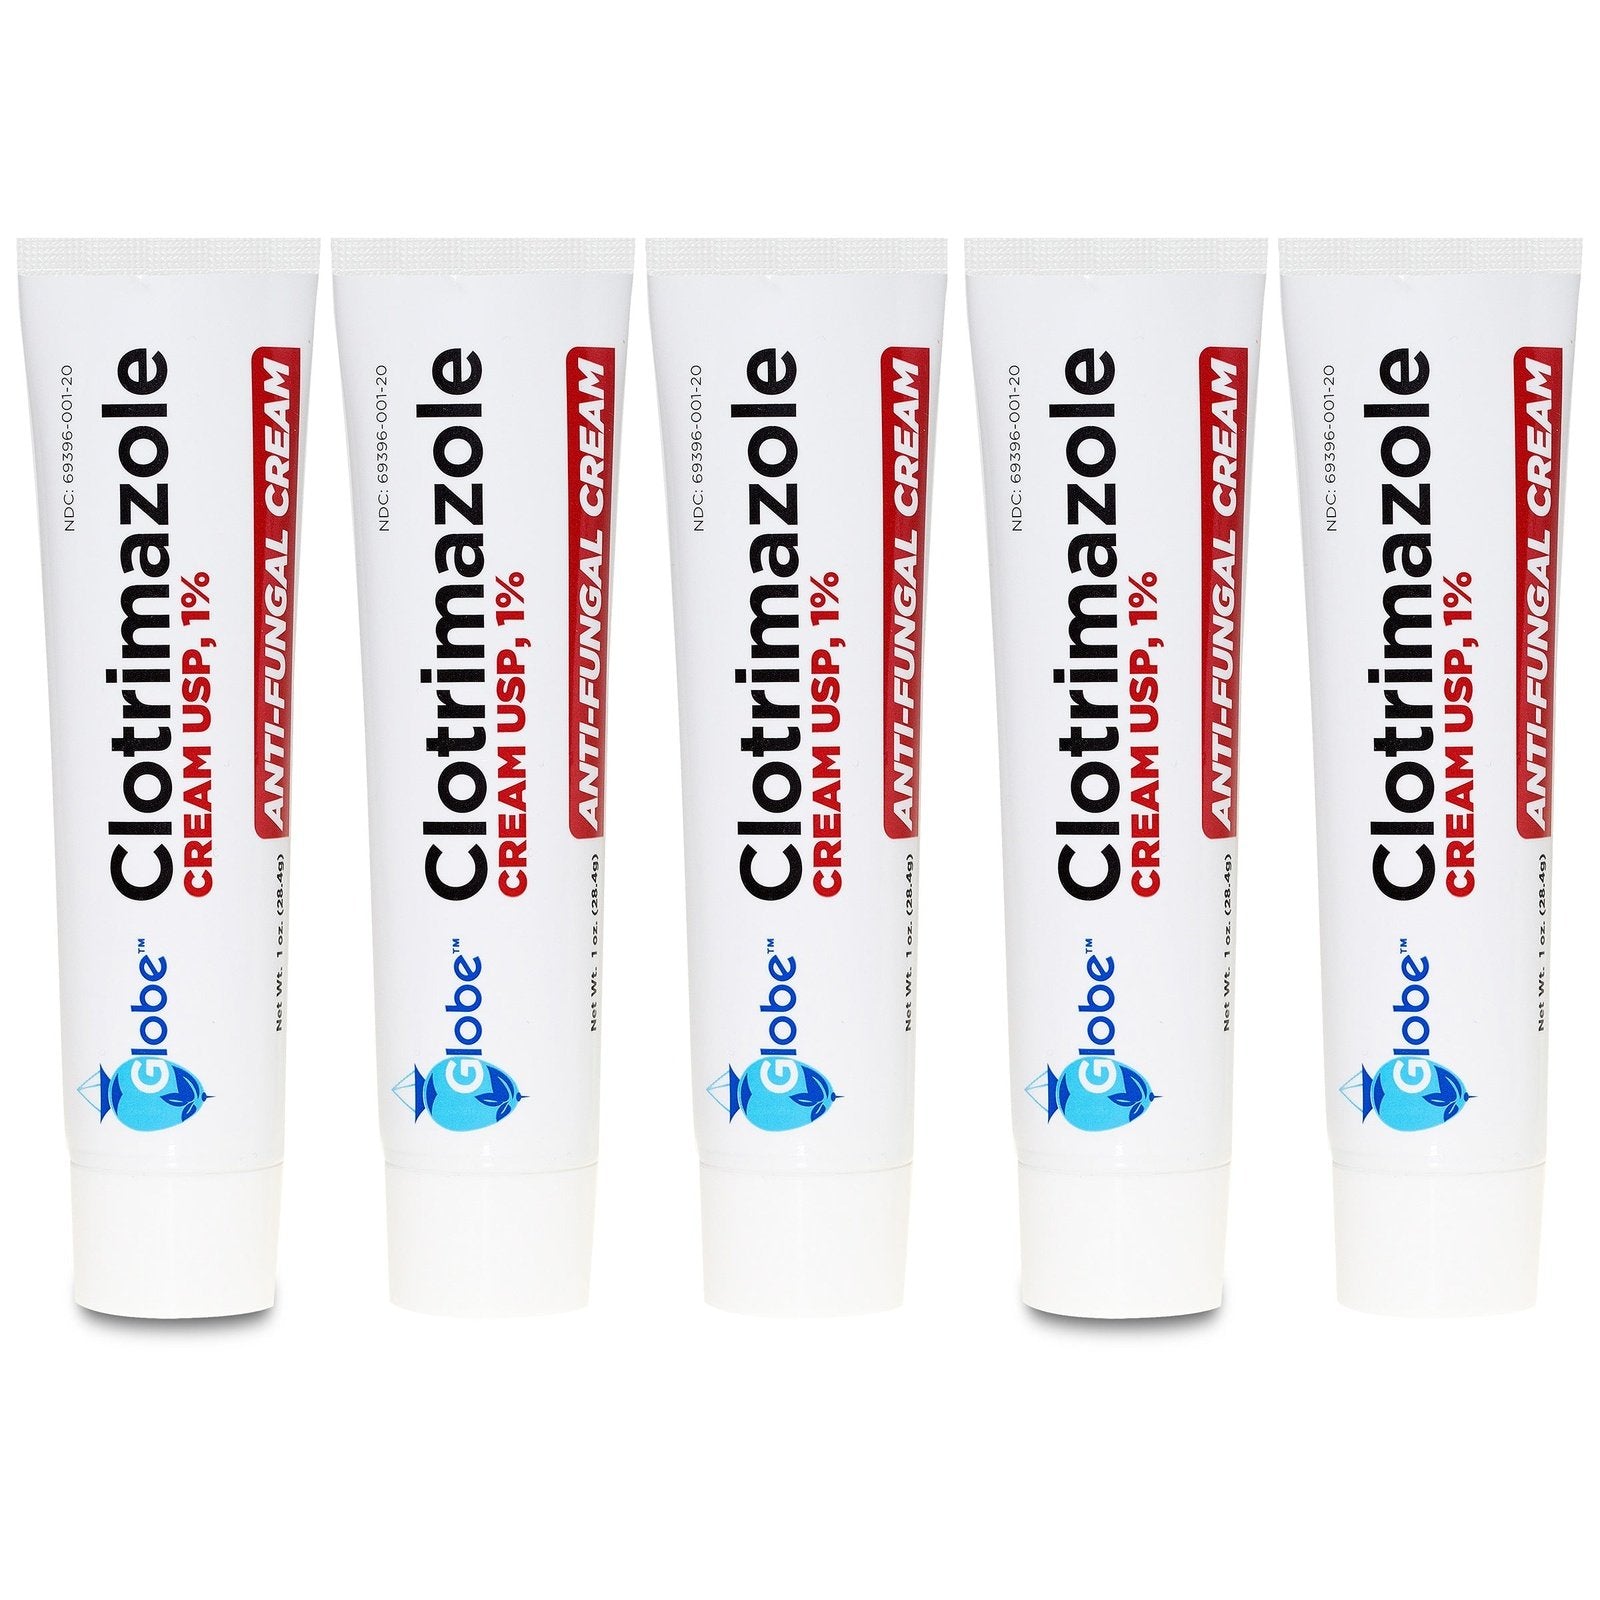 Globe Clotrimazole Cream USP 1% - 1oz